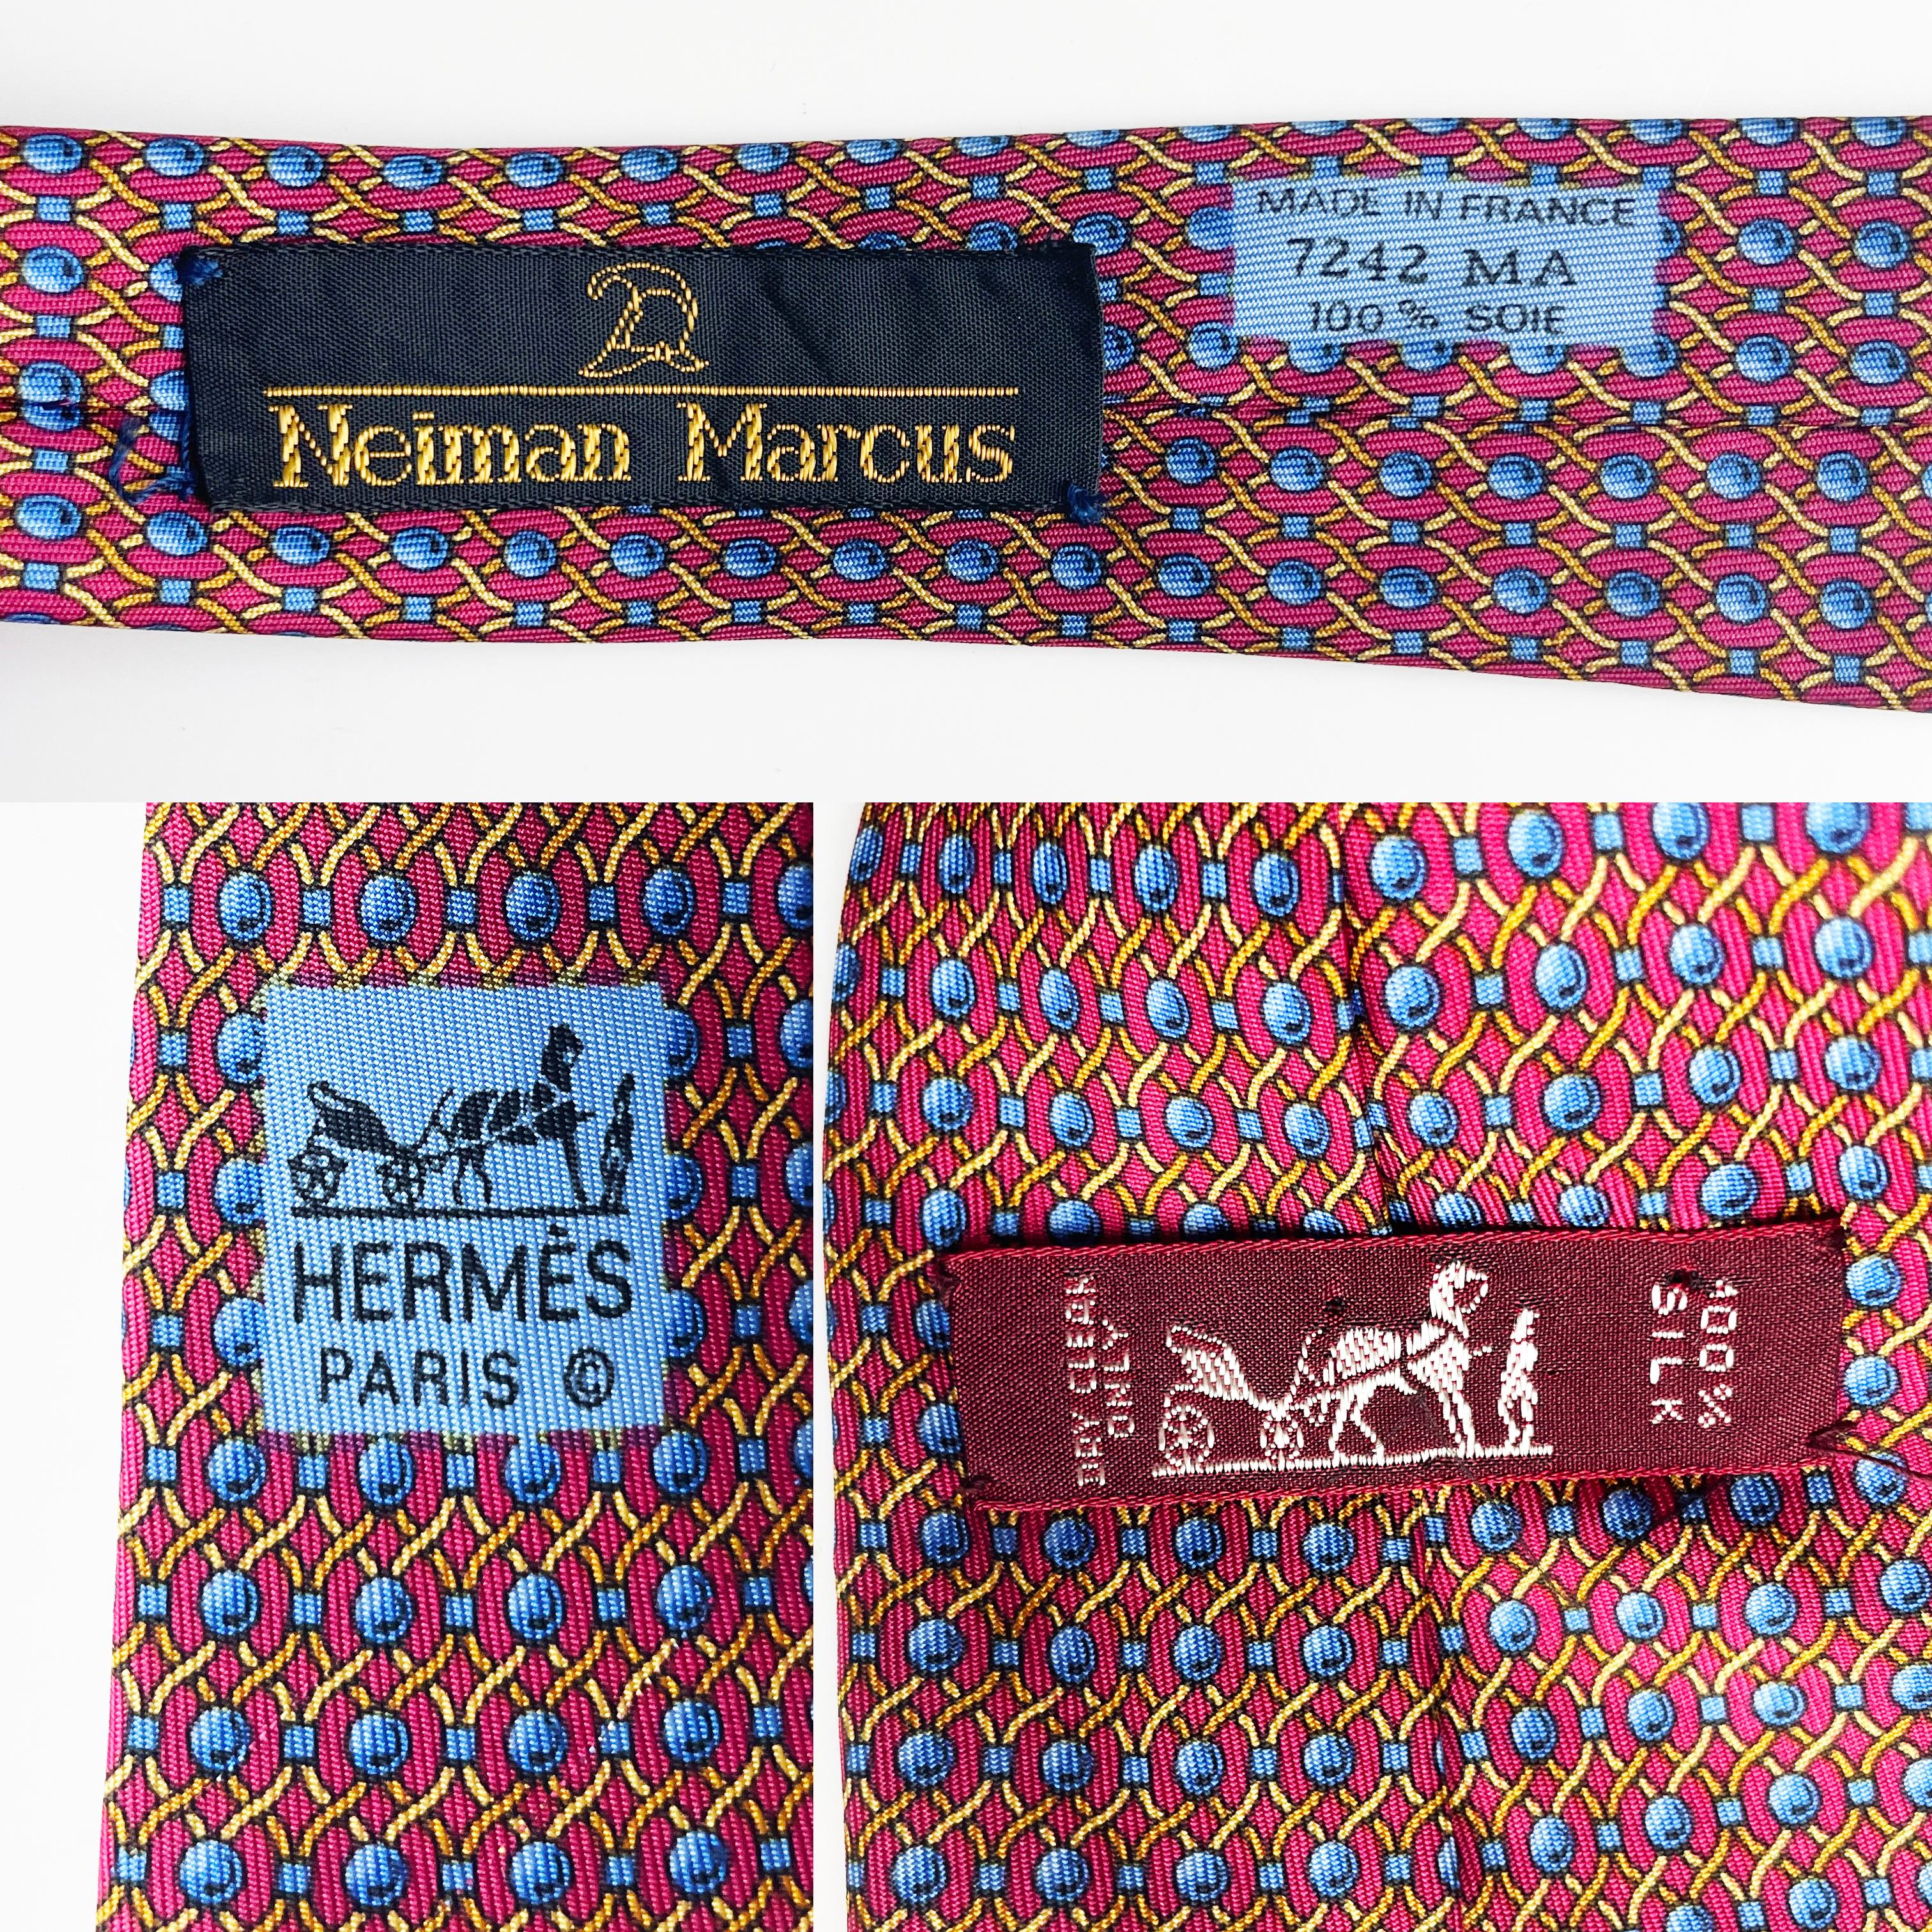 Men's Hermes Necktie Silk Abstract Rope Print Style 7242 MA Vintage Luxury Menswear  For Sale